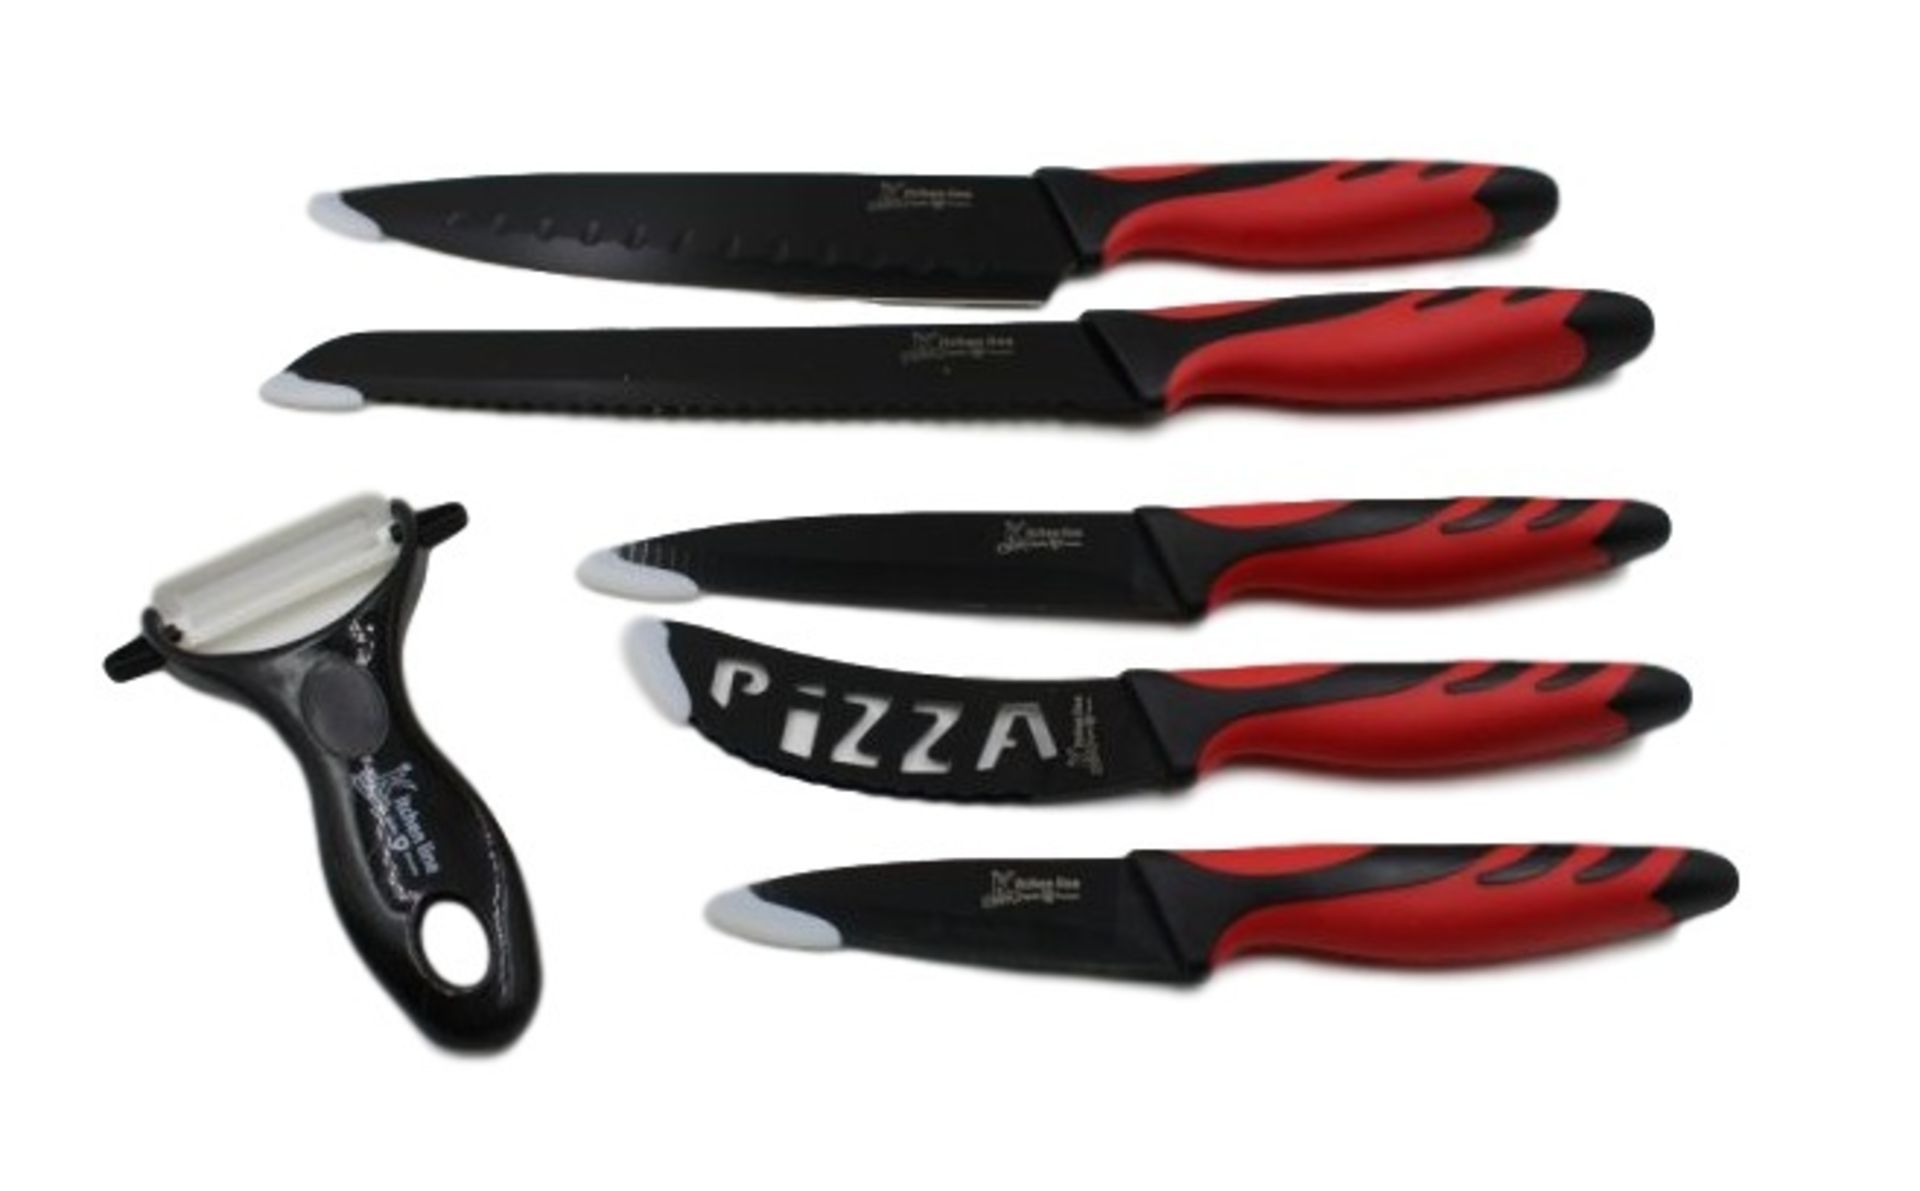 V Brand New Six Piece Knife Set Inc: 8" Chef Knife/8" Bread Knife/5" Utility Knife/3.5" Paring